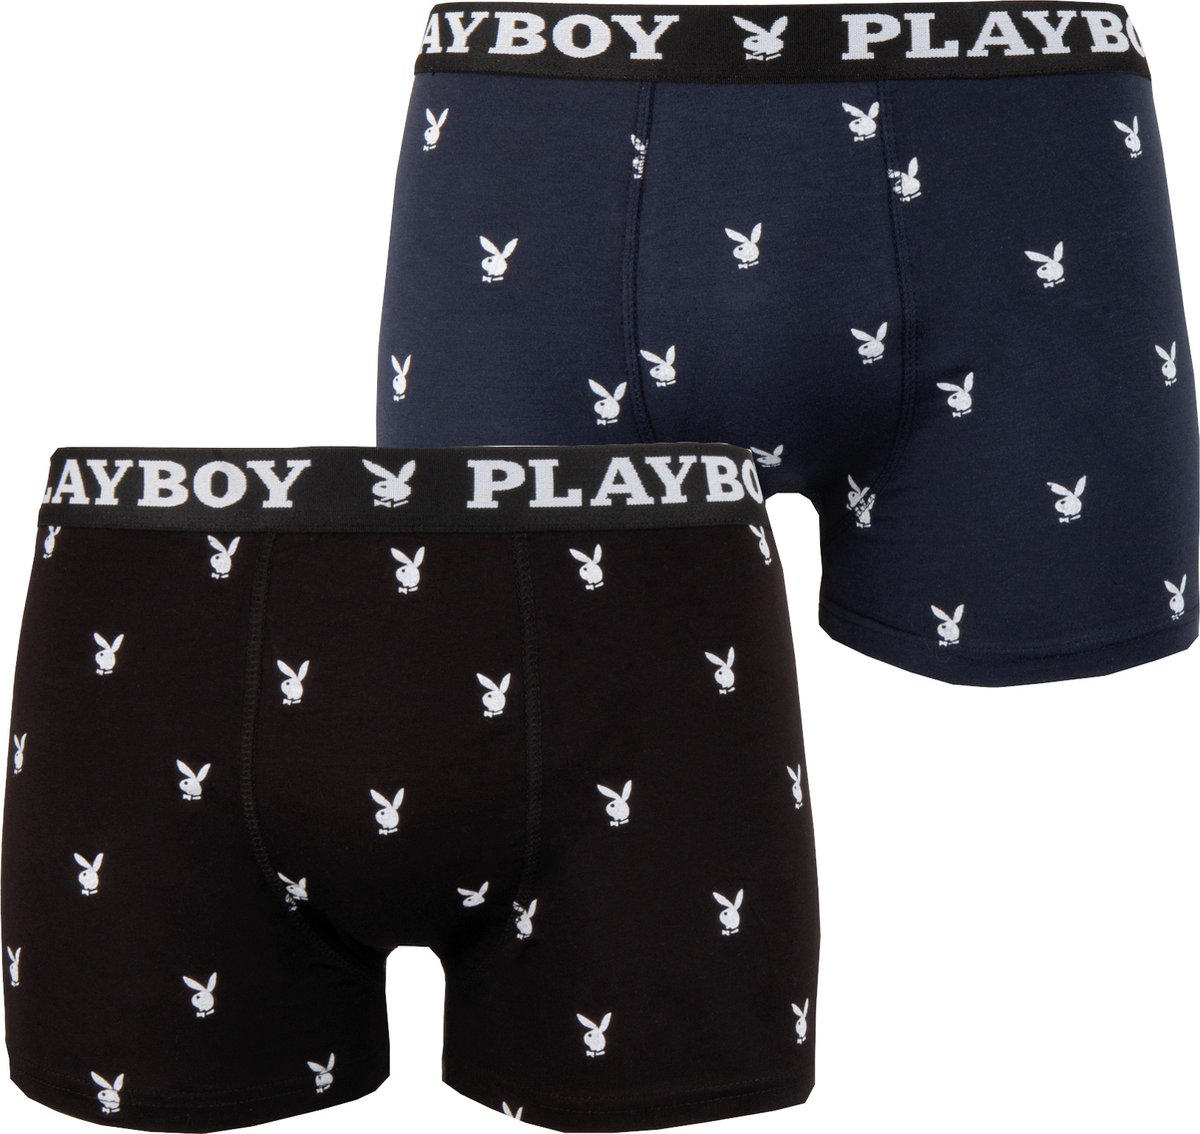 Playboy Boxershort 2 Pack Playboy Miller Maat Xxl Mannen